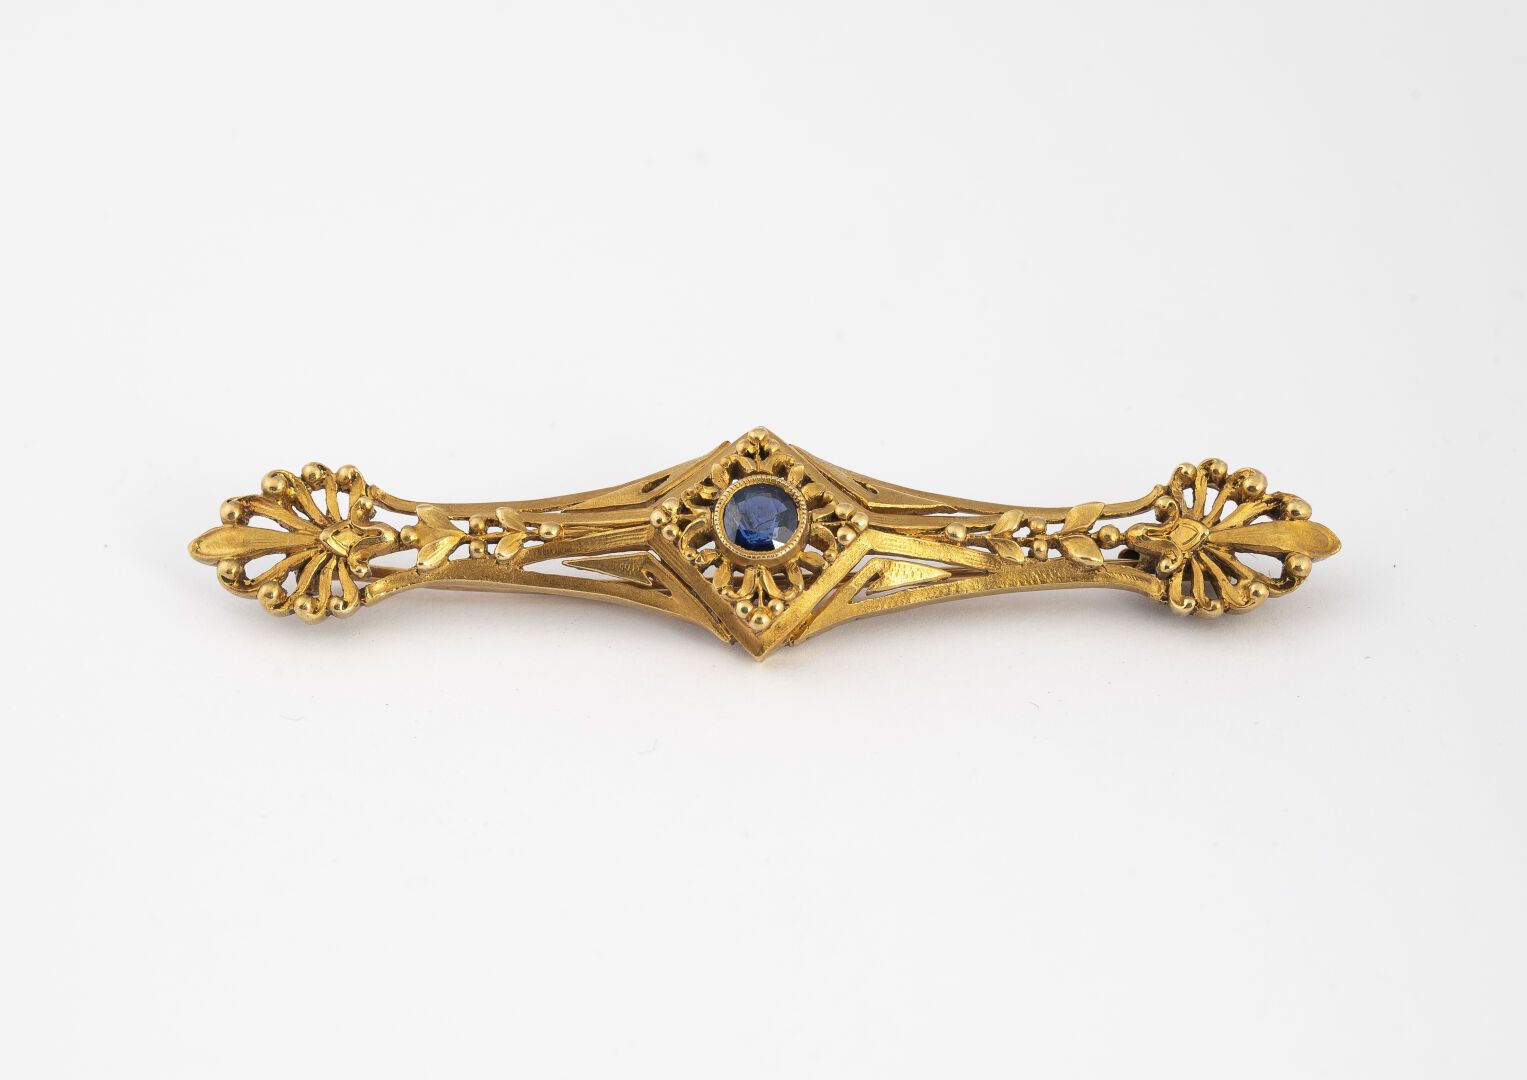 Null 发夹式胸针

在750°/°金中

镶嵌着一颗蓝宝石，并有棕榈花纹装饰。

约1900年。

毛重 : 9,89 g